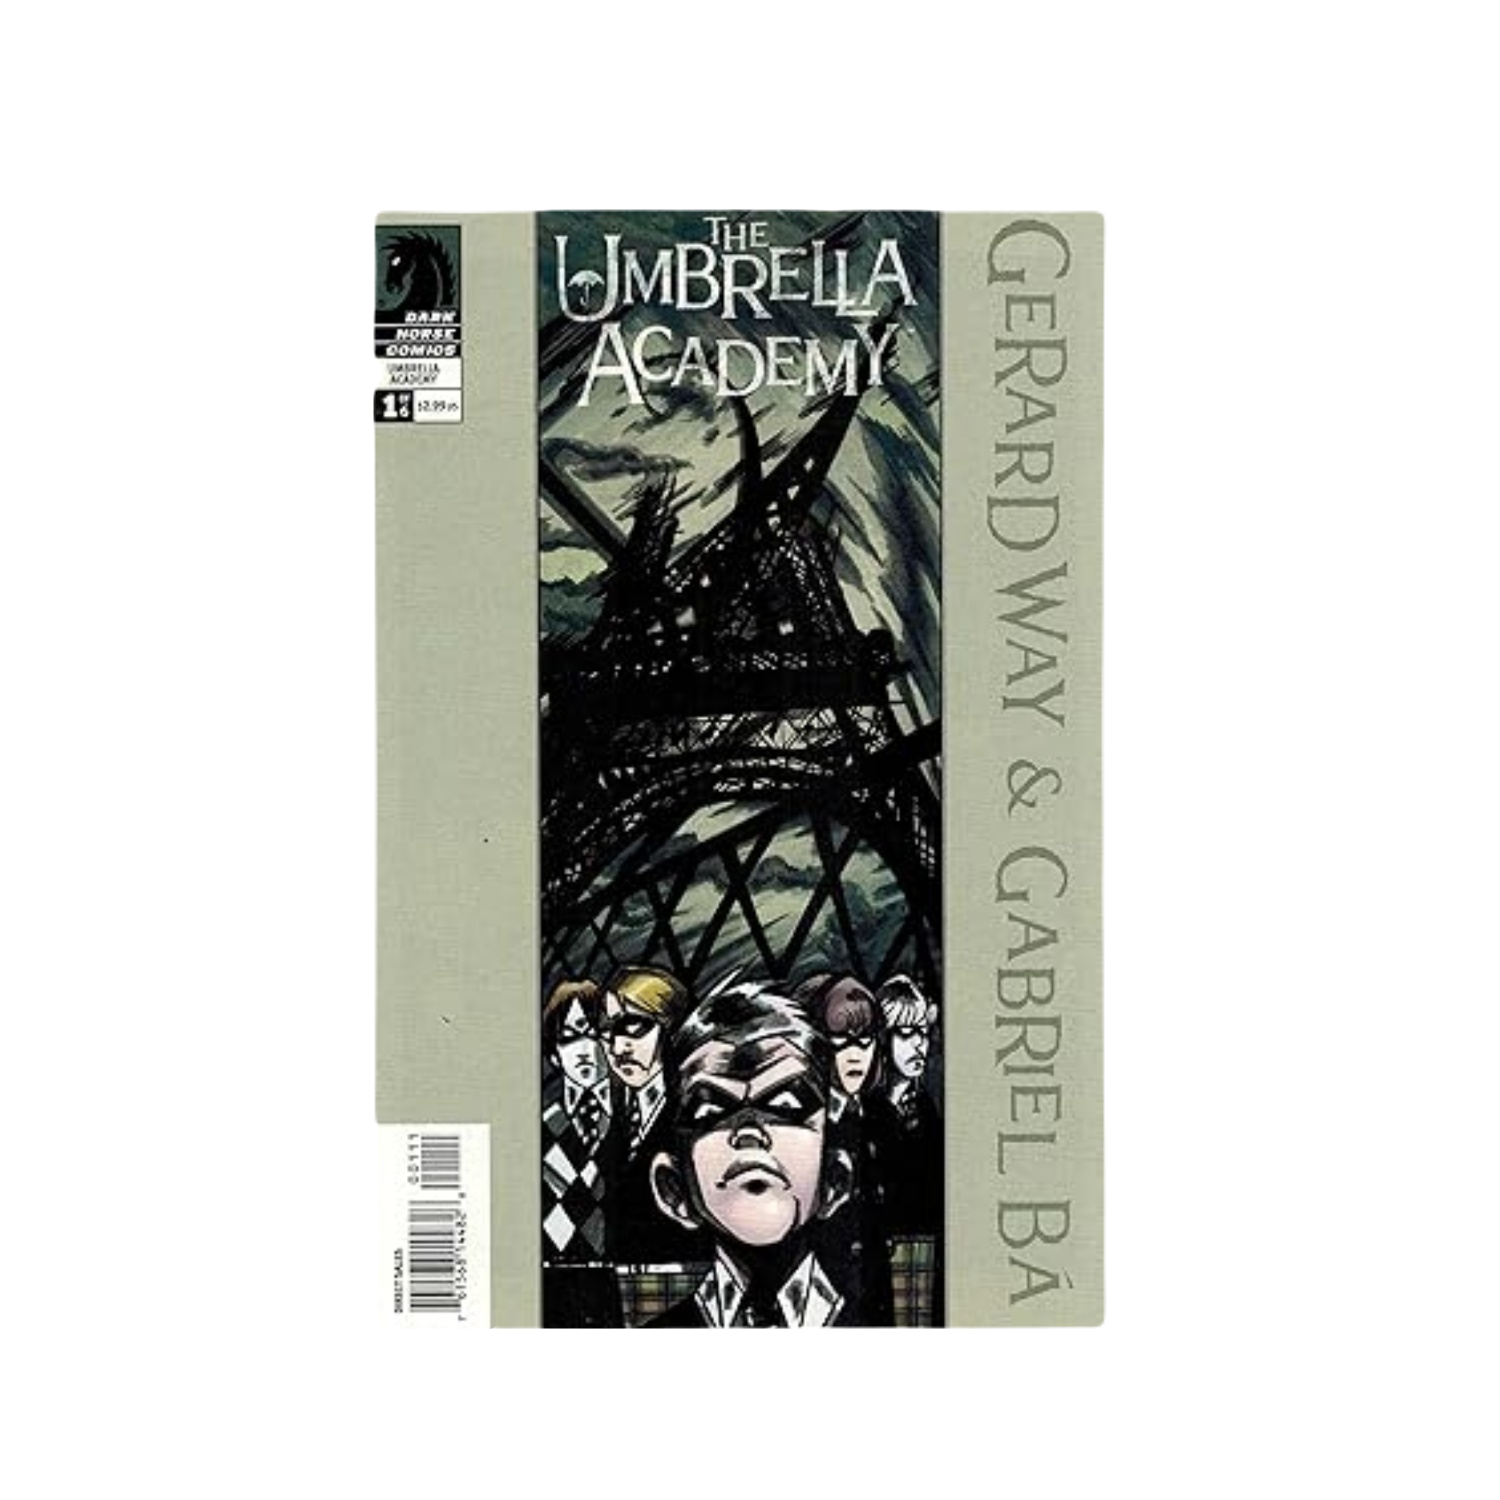 Umbrella Academy Apocalypse Suite #1 (Comic Book): Limited edition